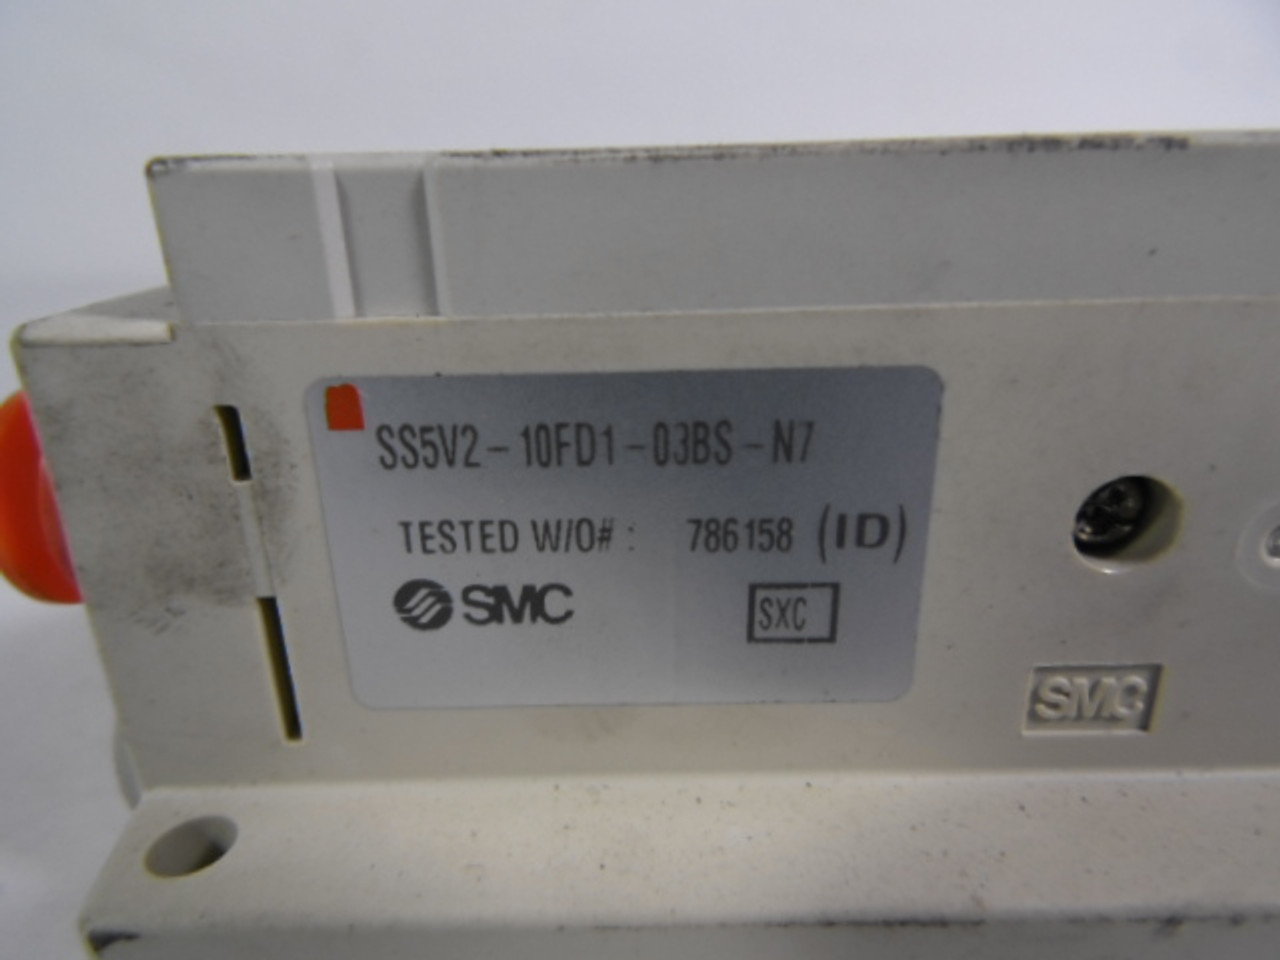 SMC SS5V2-10FD1-03BS-N7 Plug-In Manifold USED